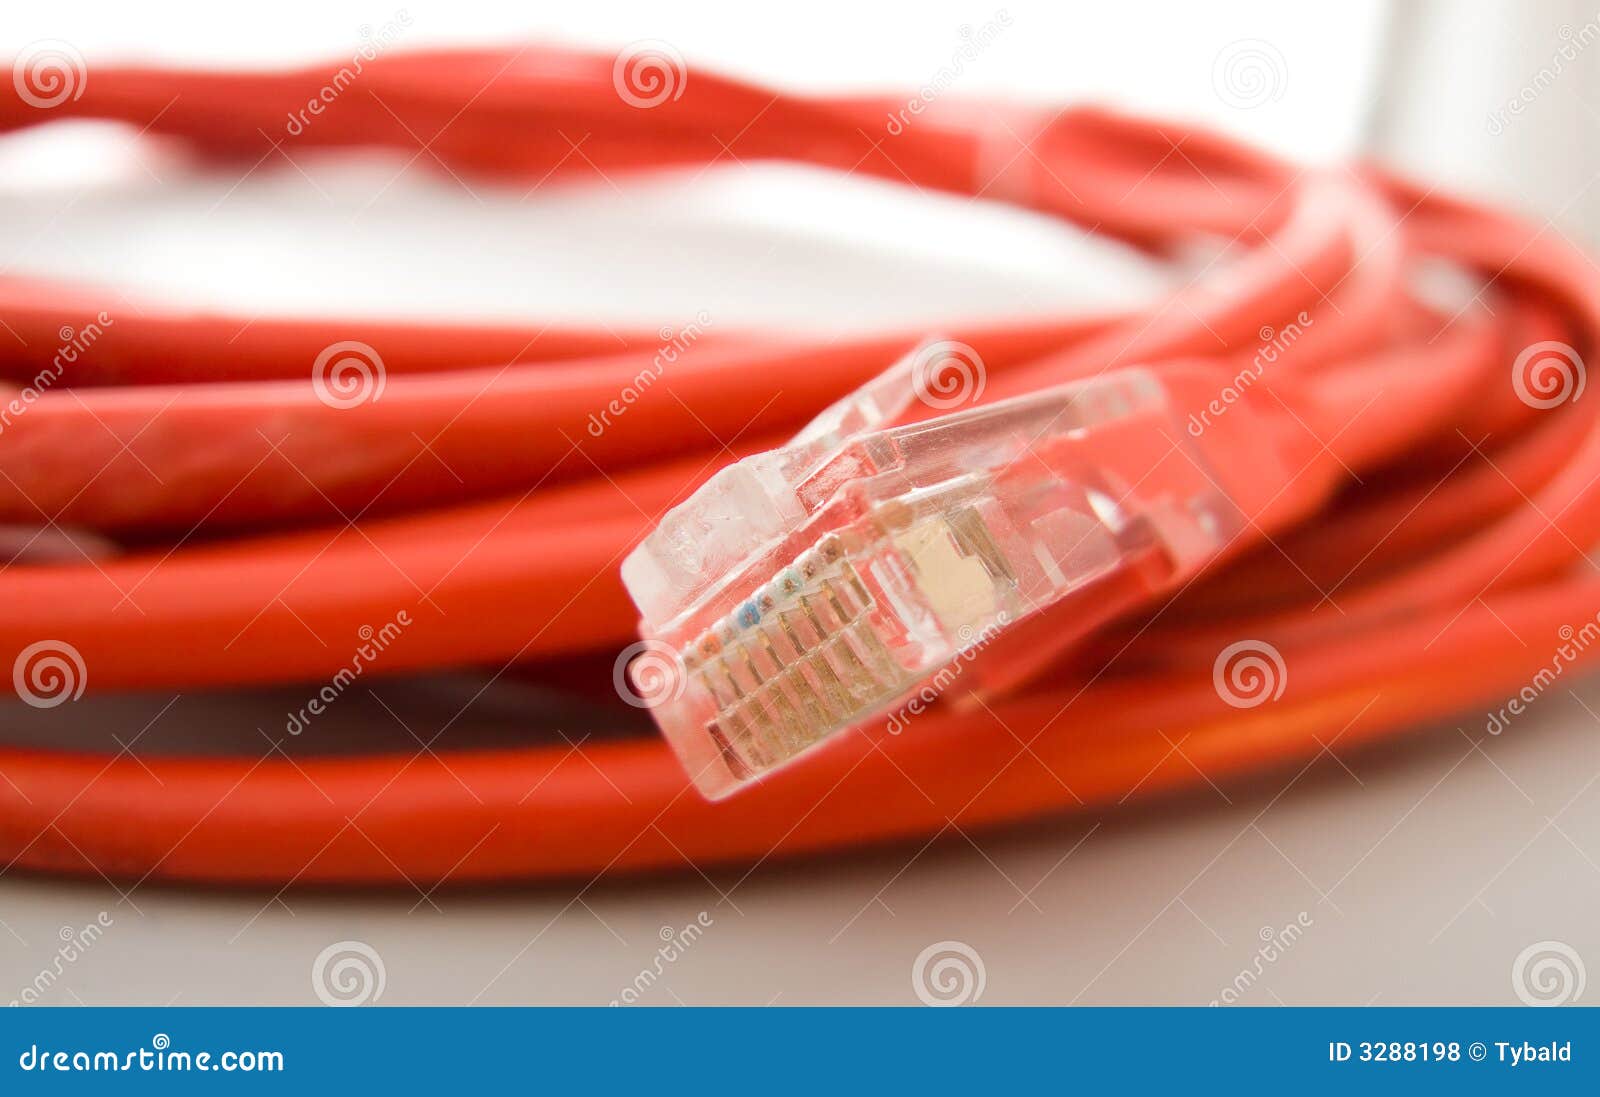 ethernet cable & plug